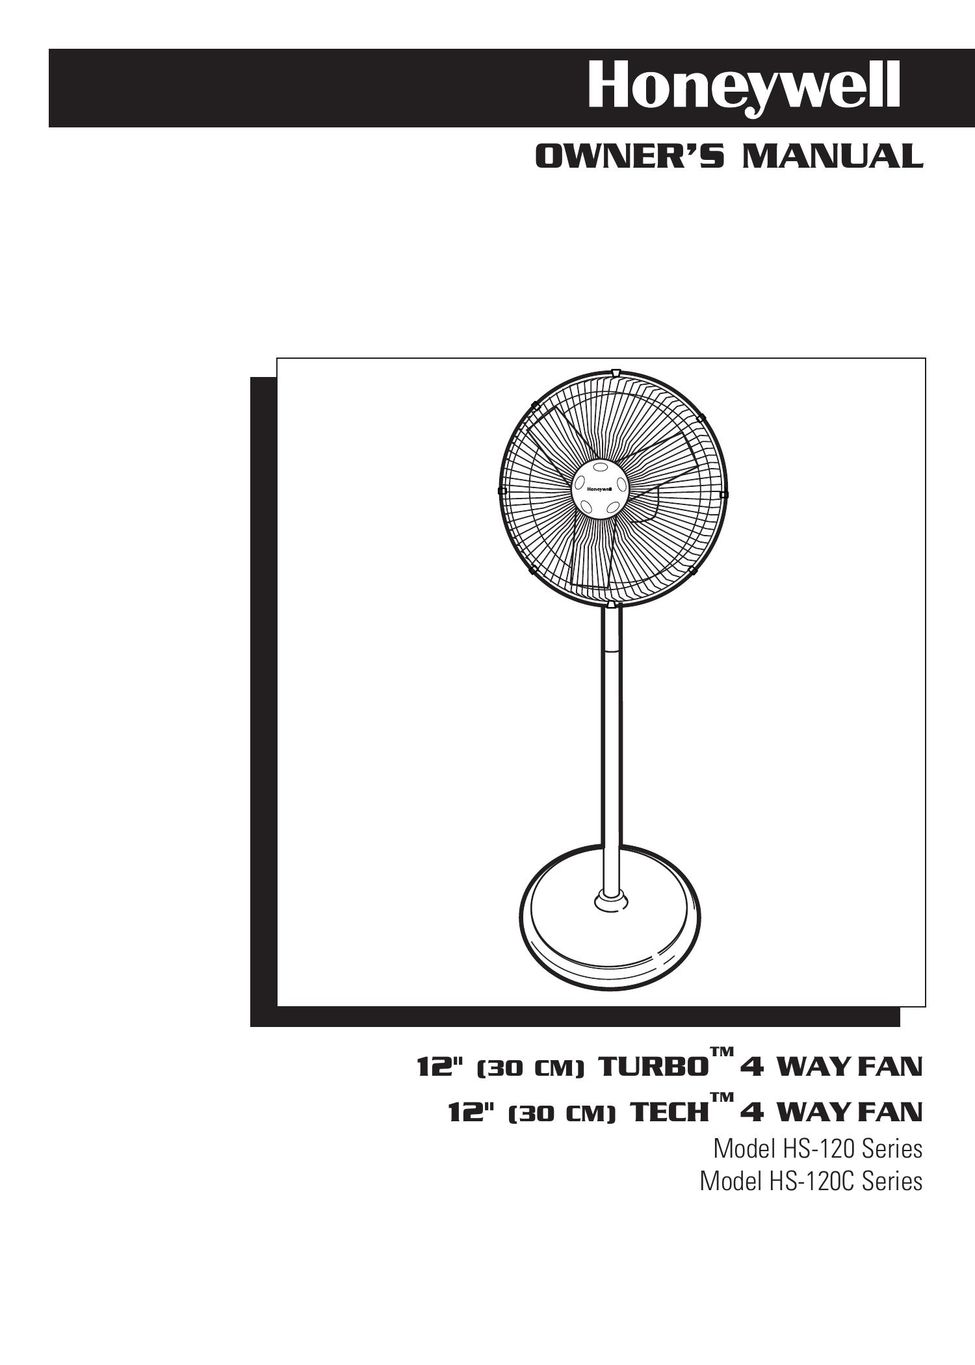 Honeywell HS-120 Series Fan User Manual